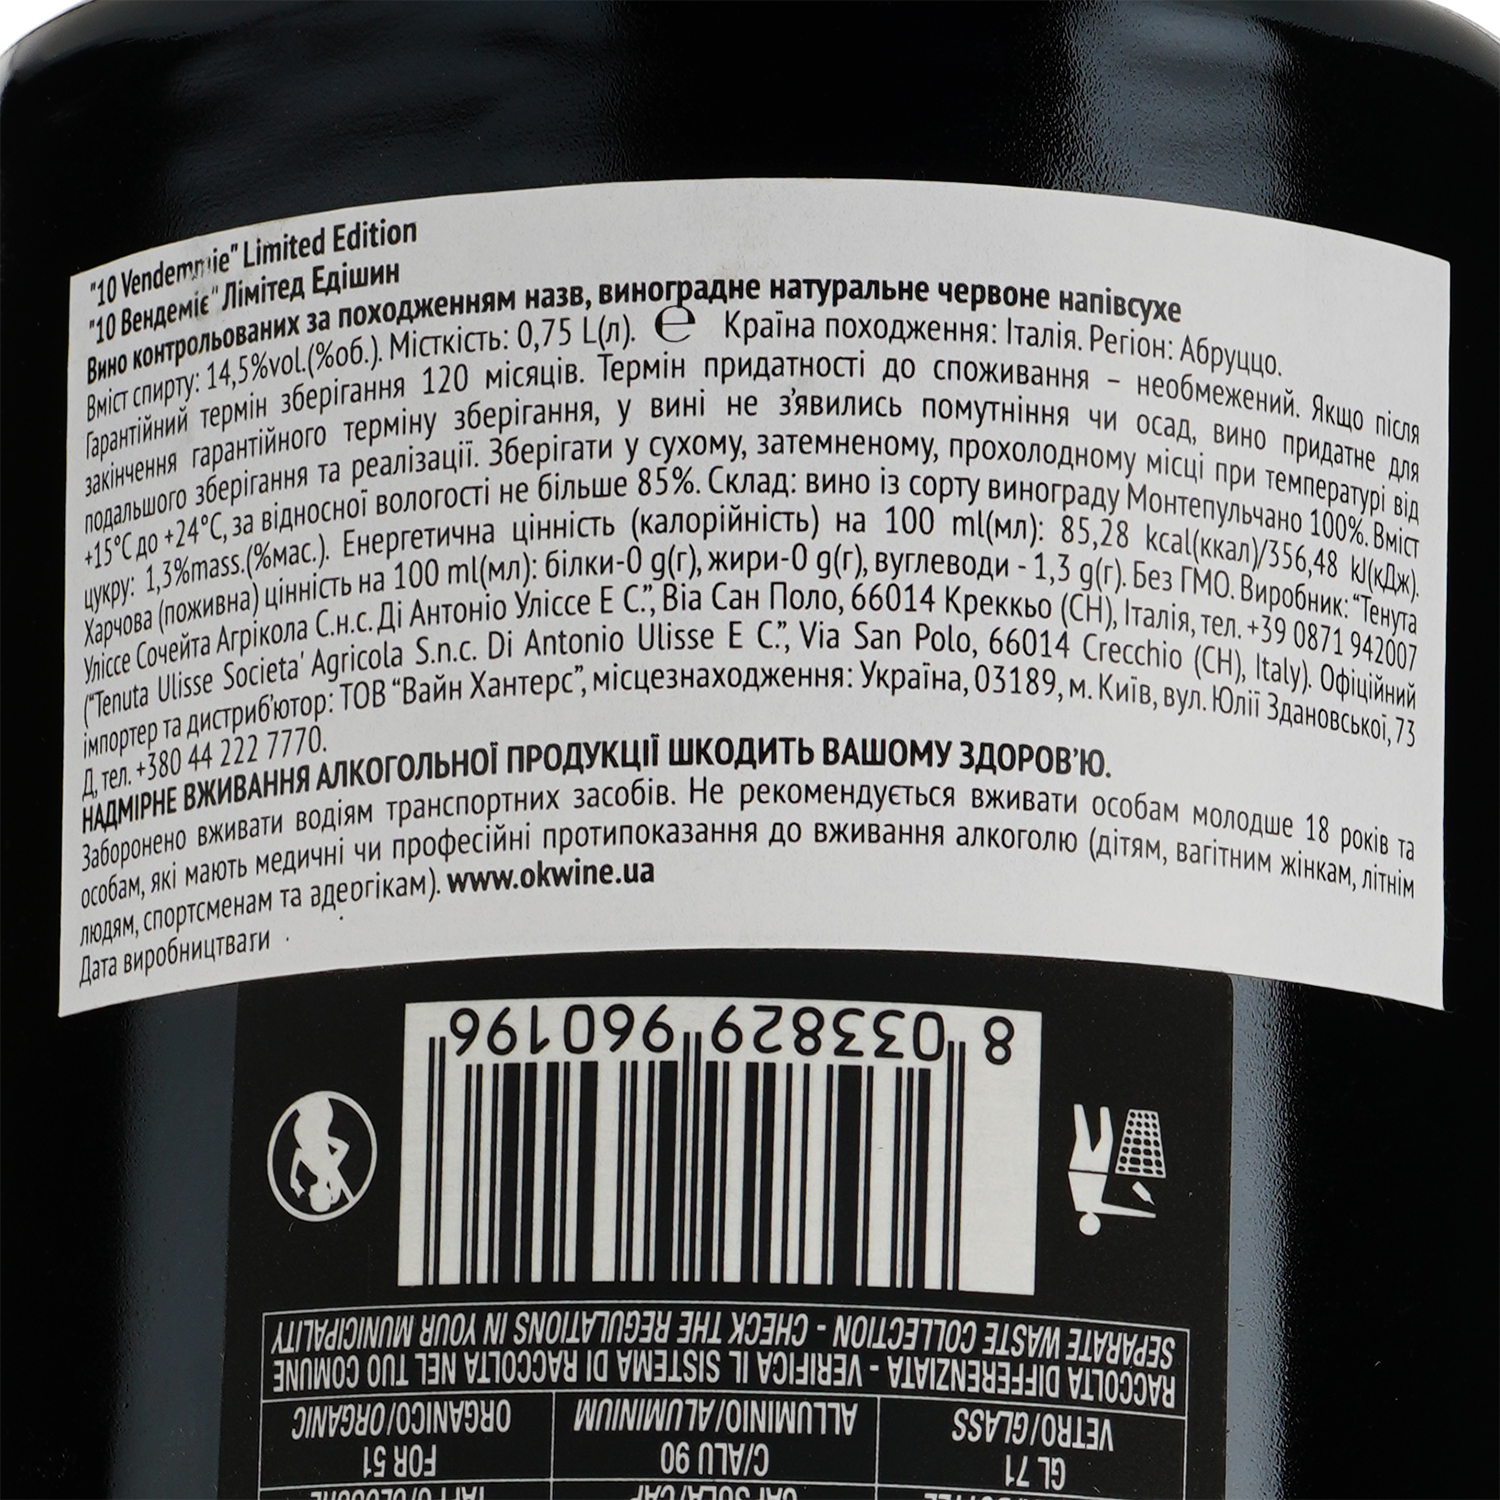 Вино Limited Edition 10 Vendemmie, красное, полусладкое, 14,5%, 0,75 л - фото 3